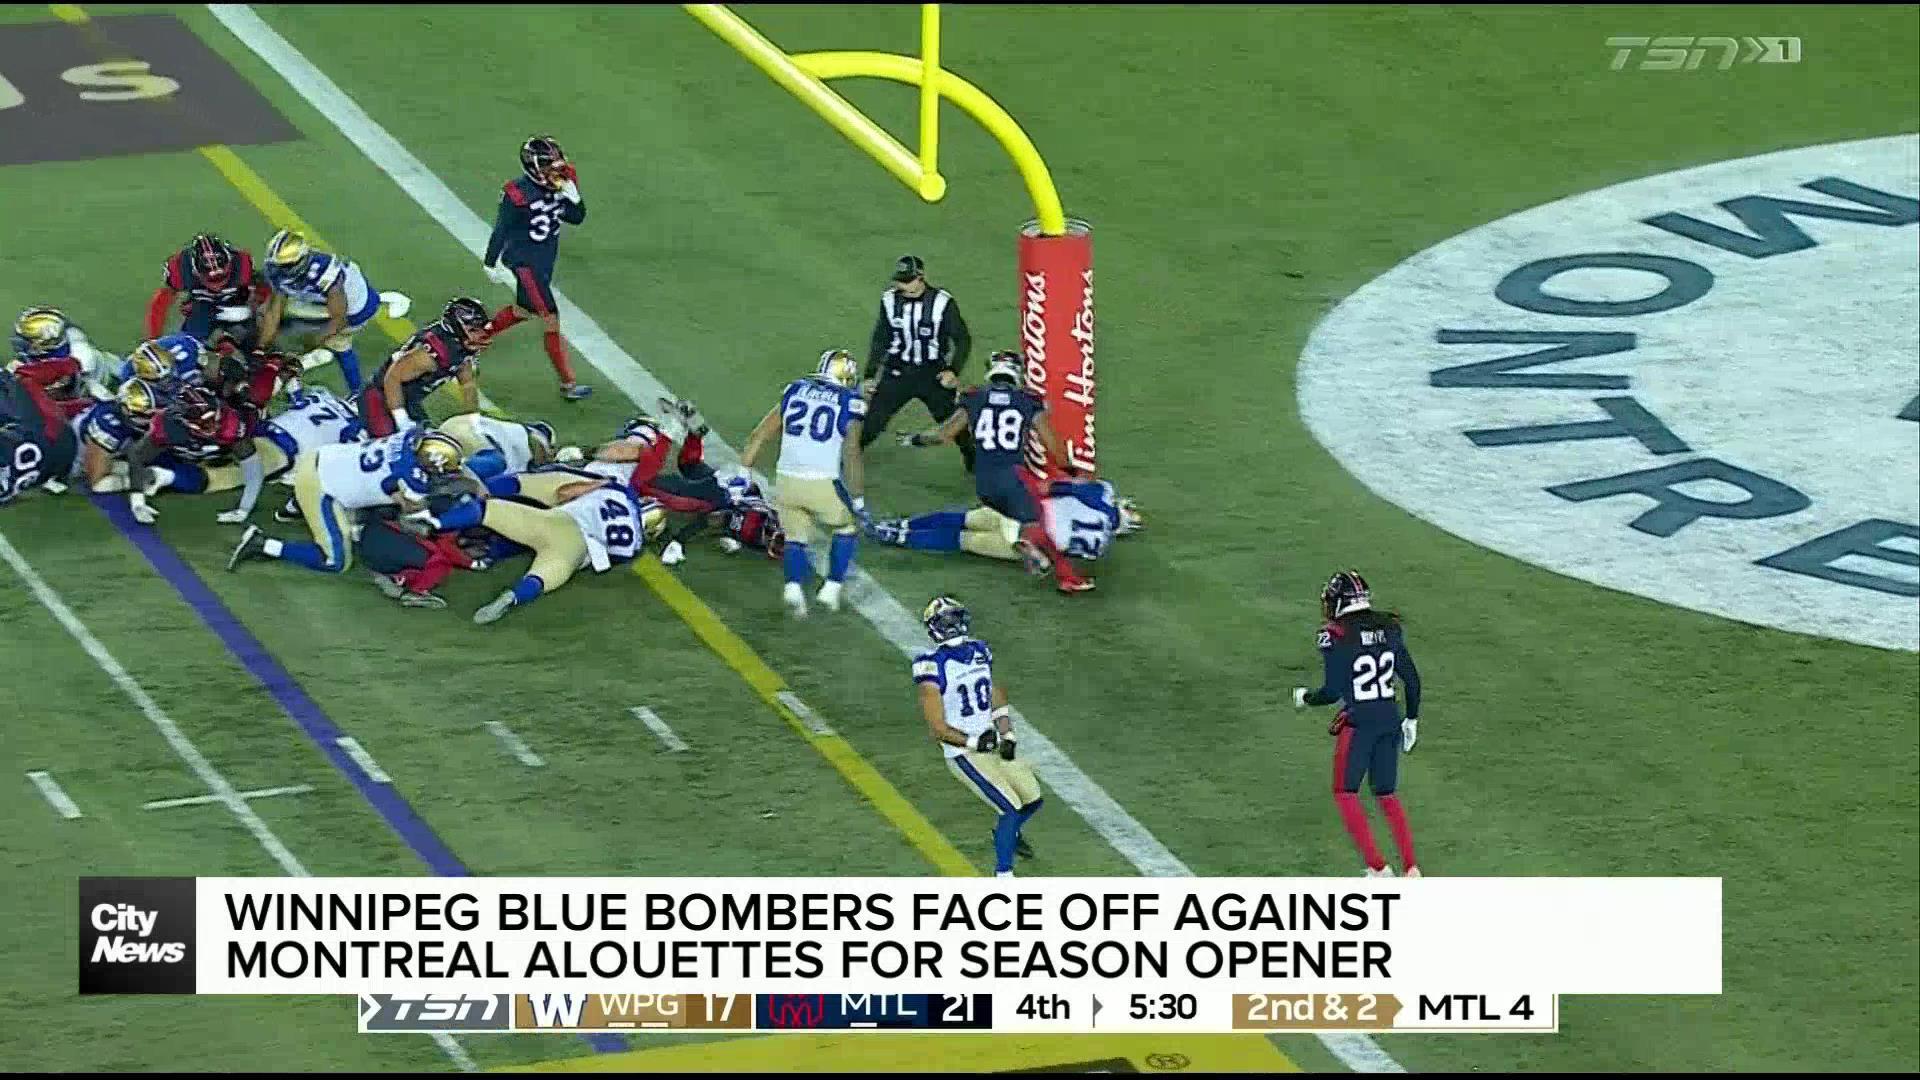 The Winnipeg Blue Bombers take on the Montreal Alouettes to kick of the CFL season